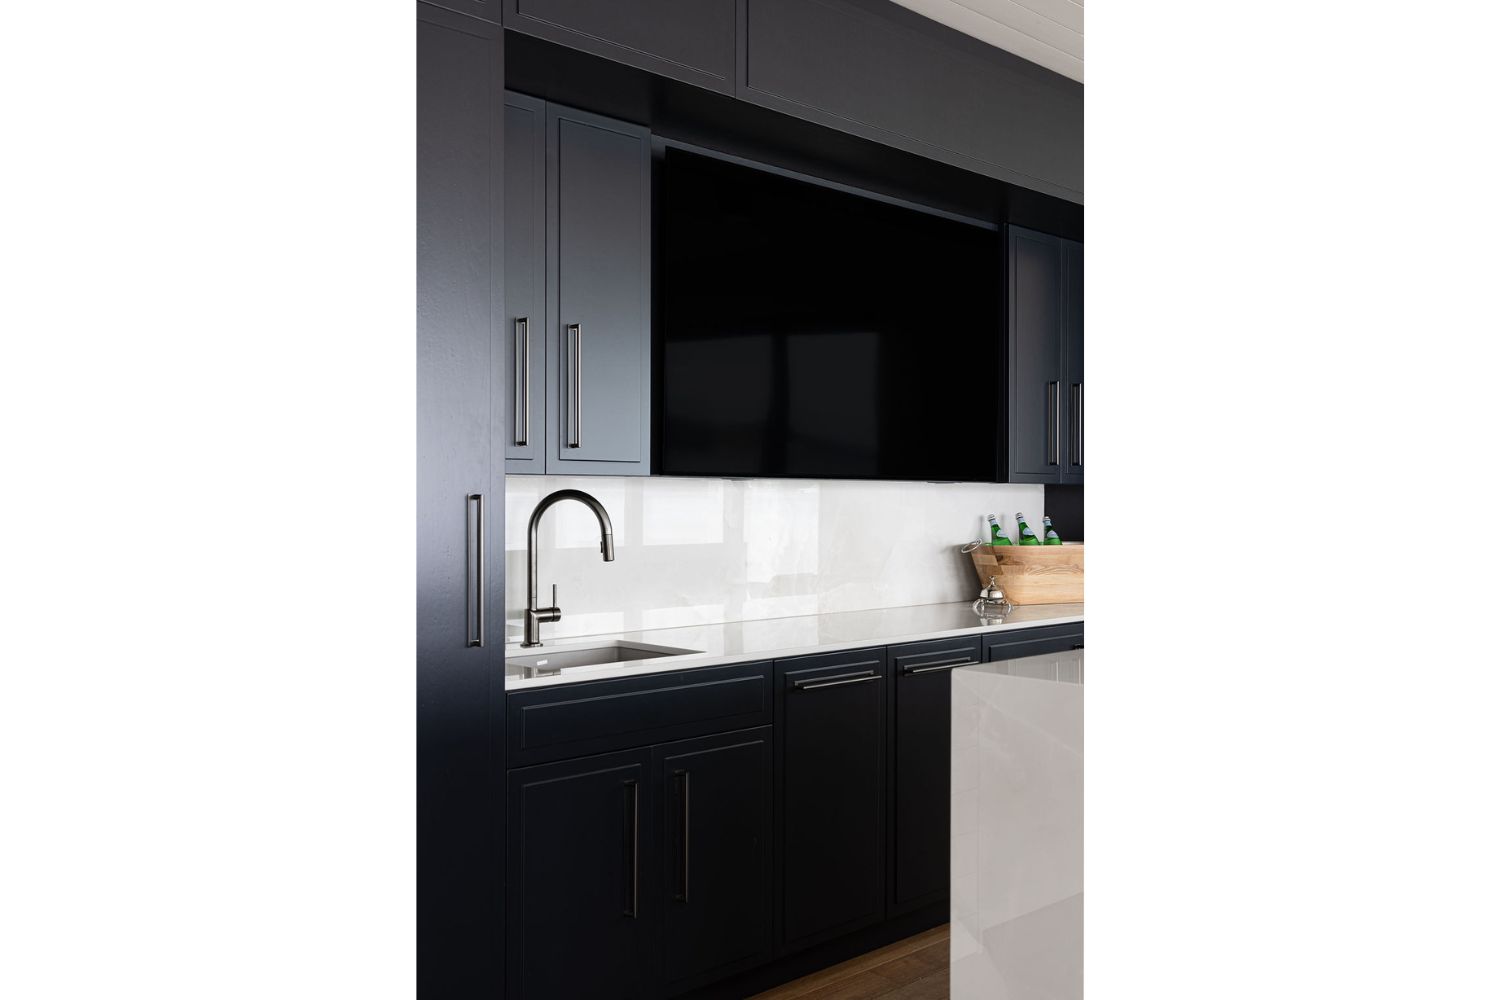 Project Cedar Rail: Black Painted Cedar Cabinets